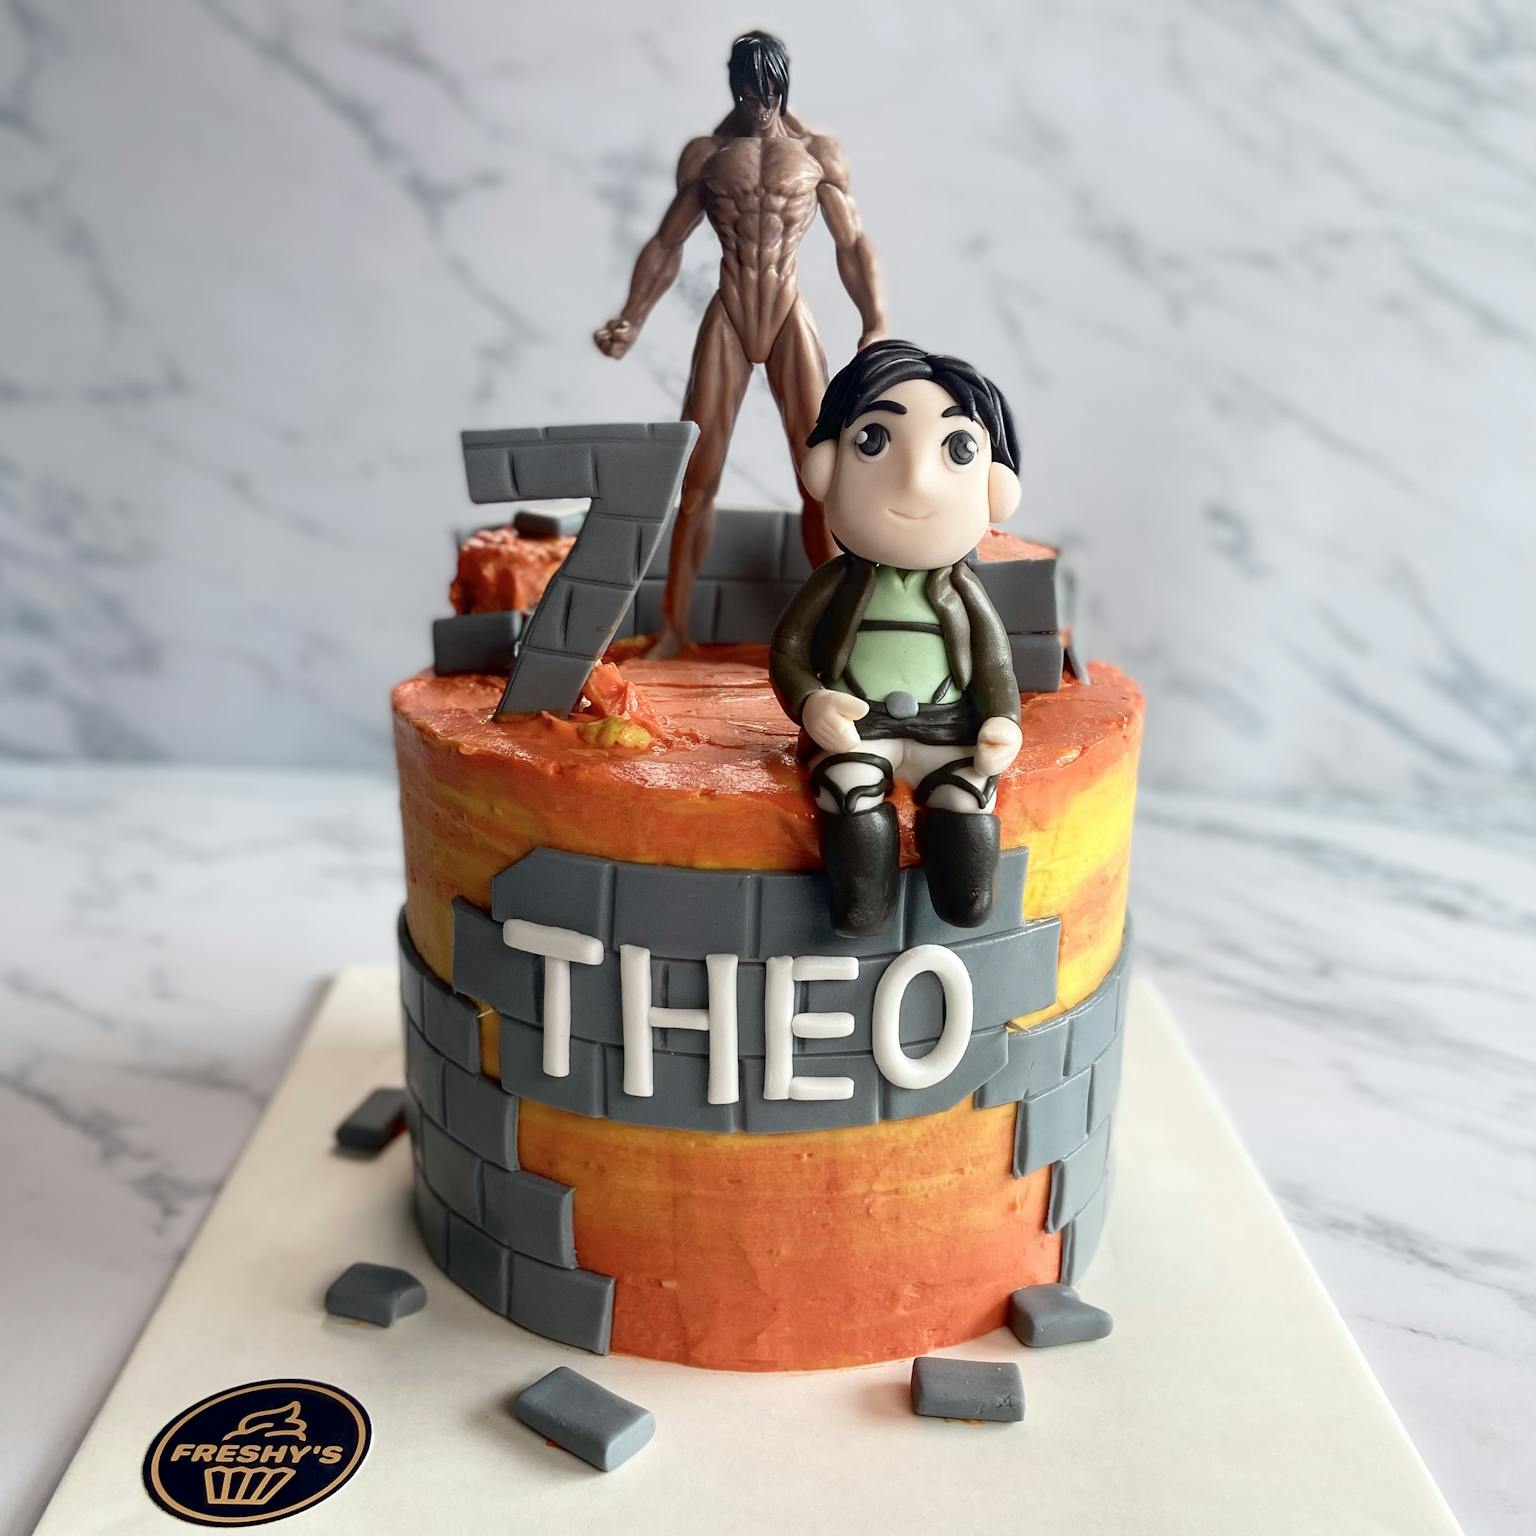 100% edible fondant sculpted Clash of the Titans cake